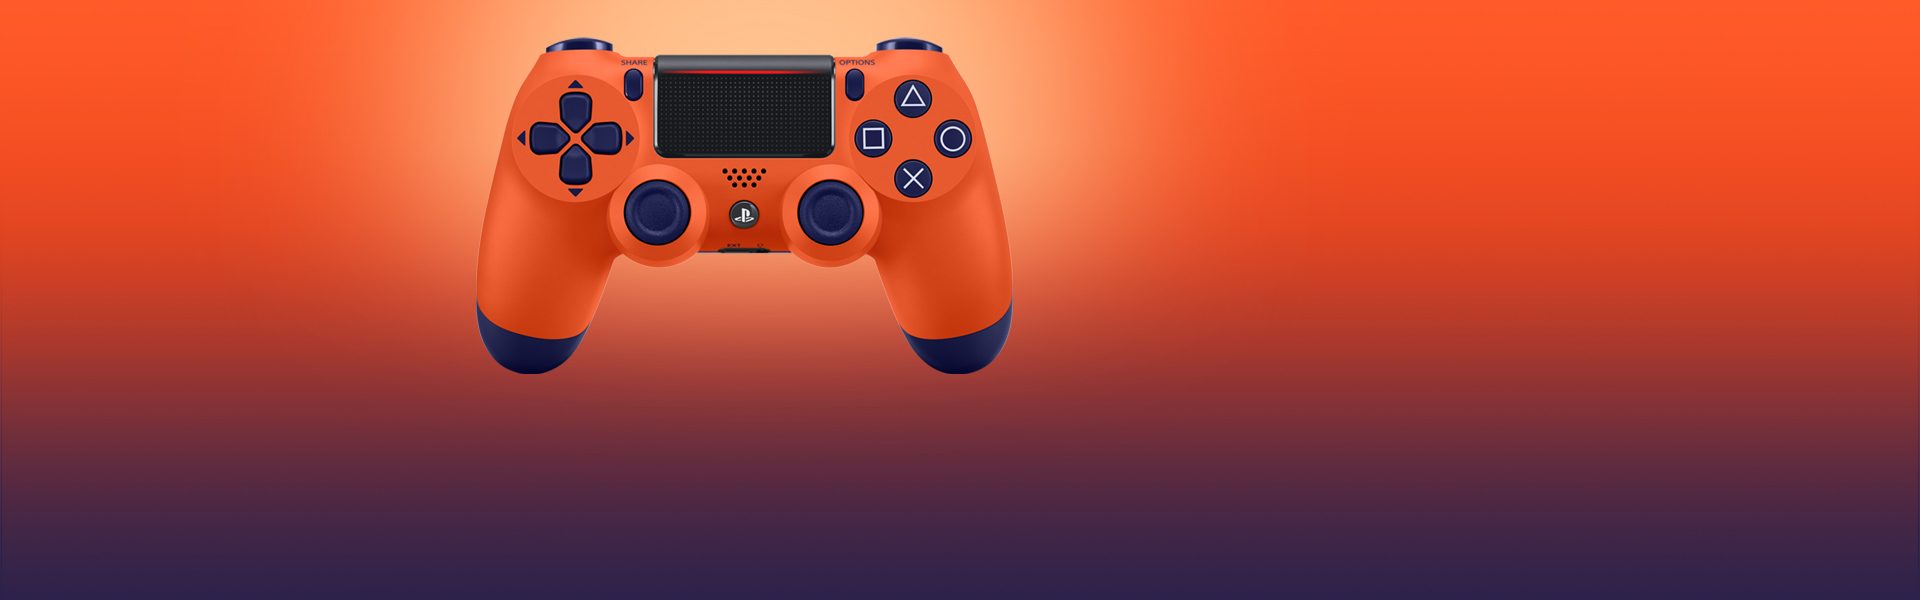 sunset orange playstation 4 controller